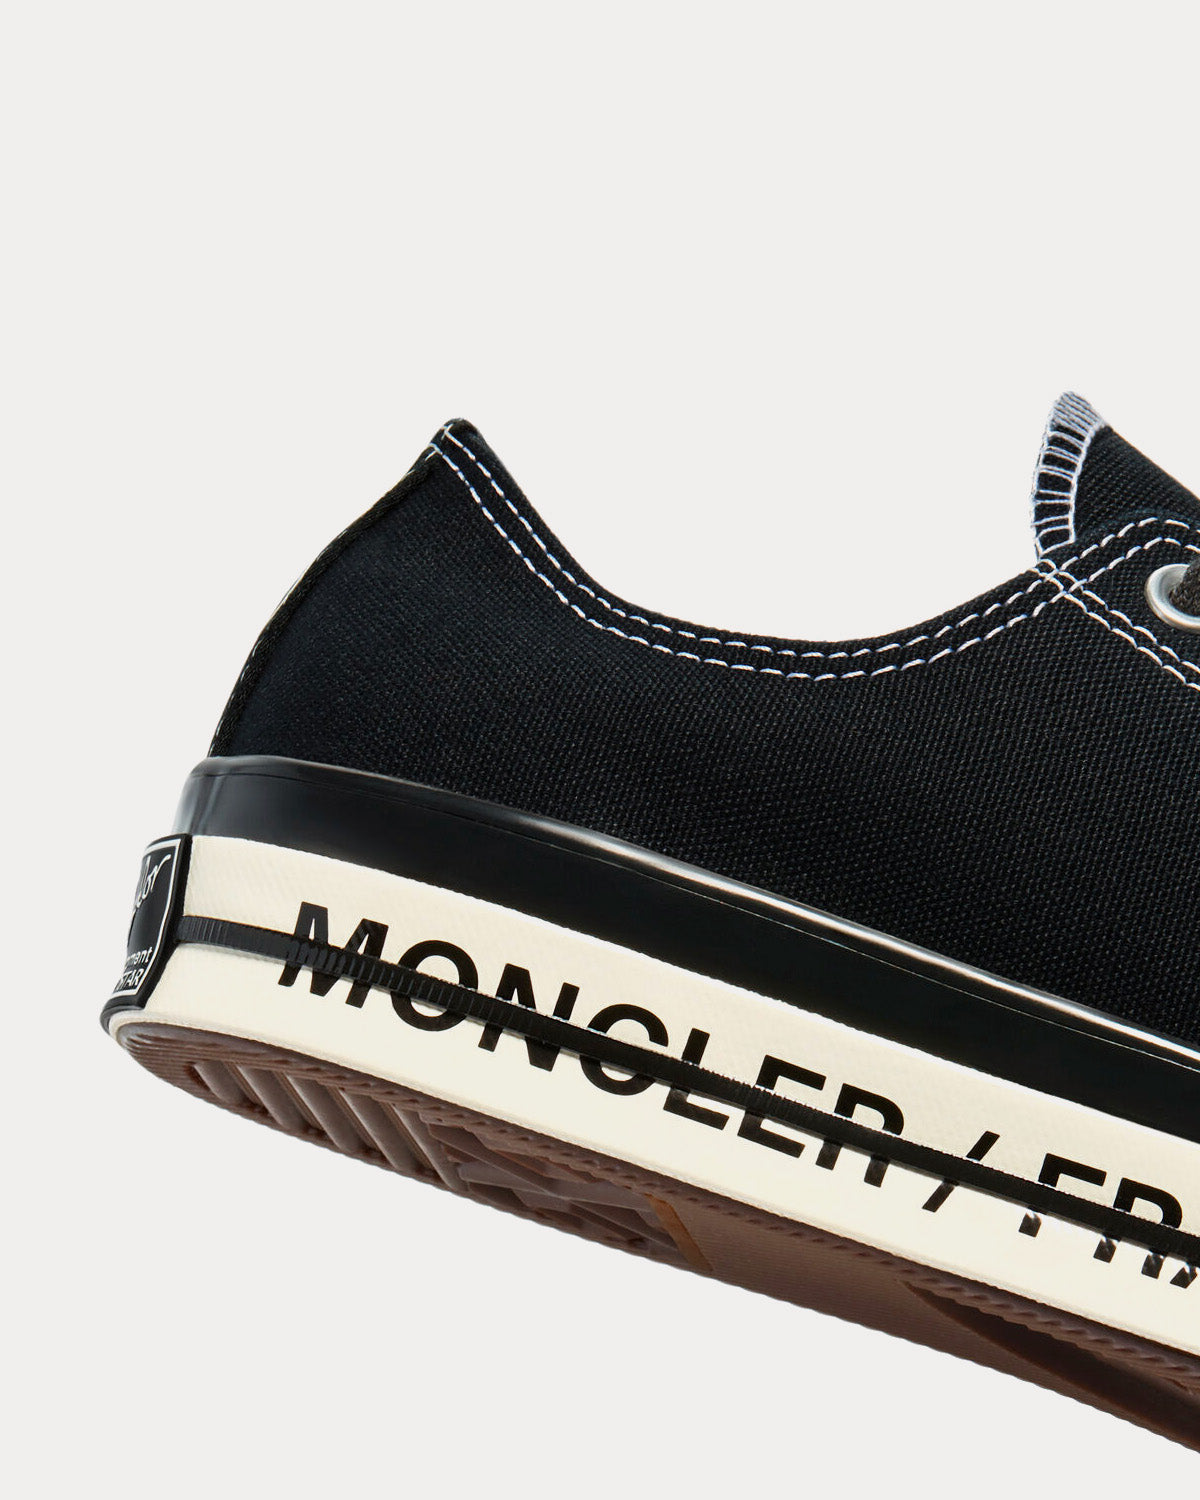 Converse x 7 Moncler FRGMT - Chuck 70 Black / Black / Egret Low Top Sneakers